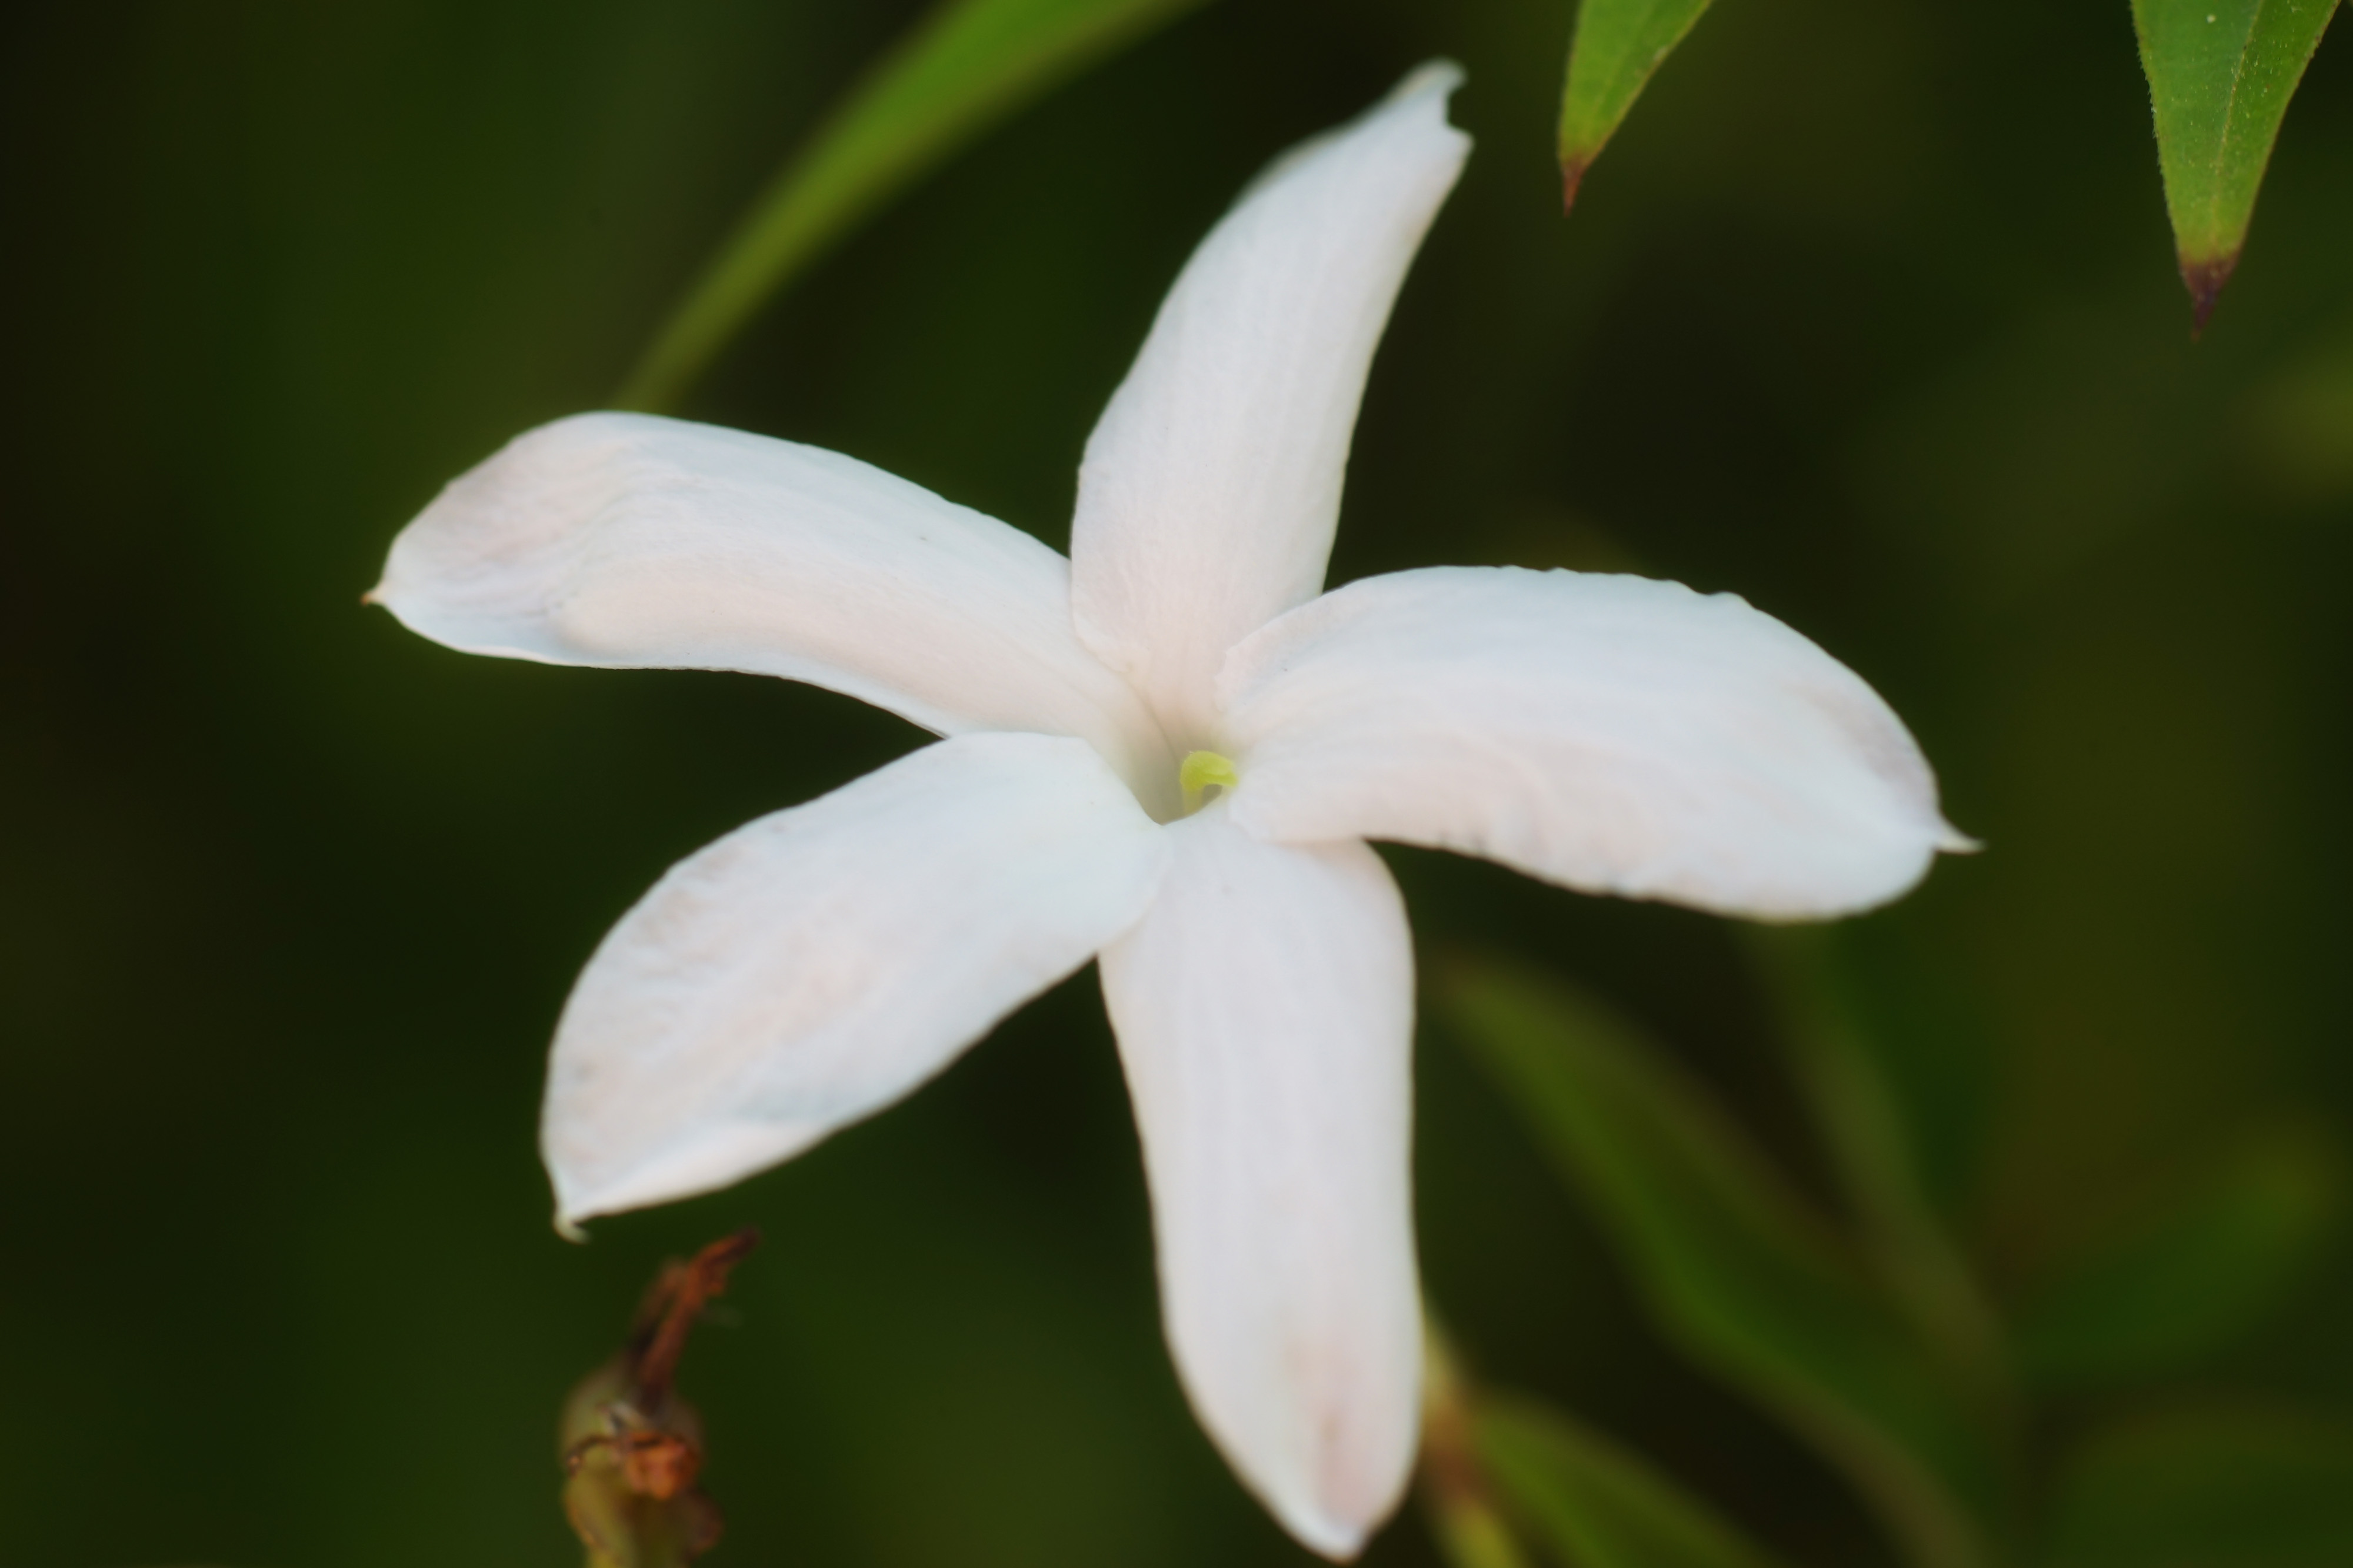 Two more free stock photos of white jasmine flowers